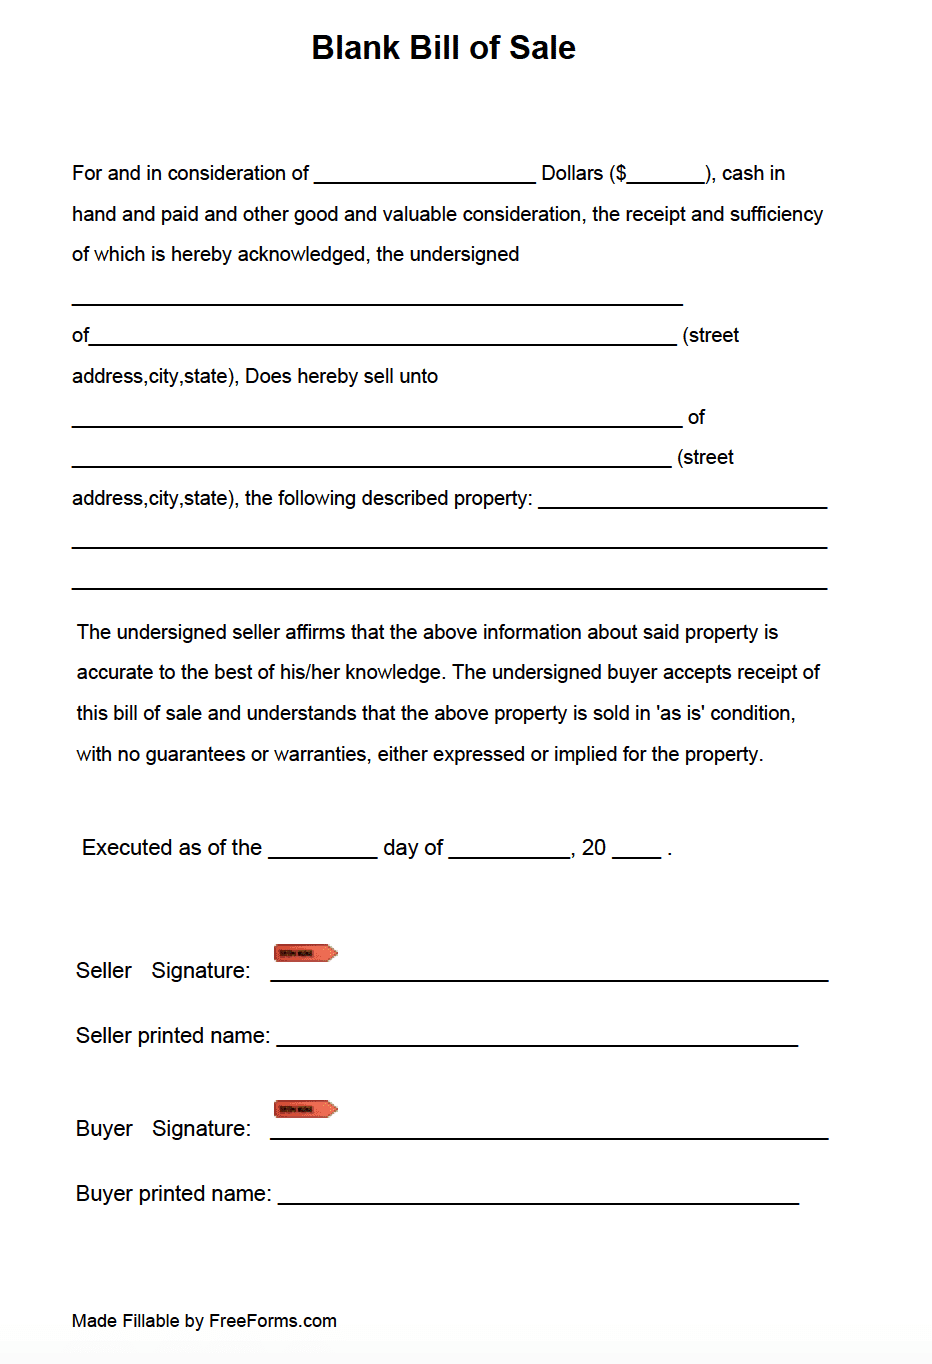 Free Blank Bill Of Sale Form PDF - Free Printable Bill of Sale Form